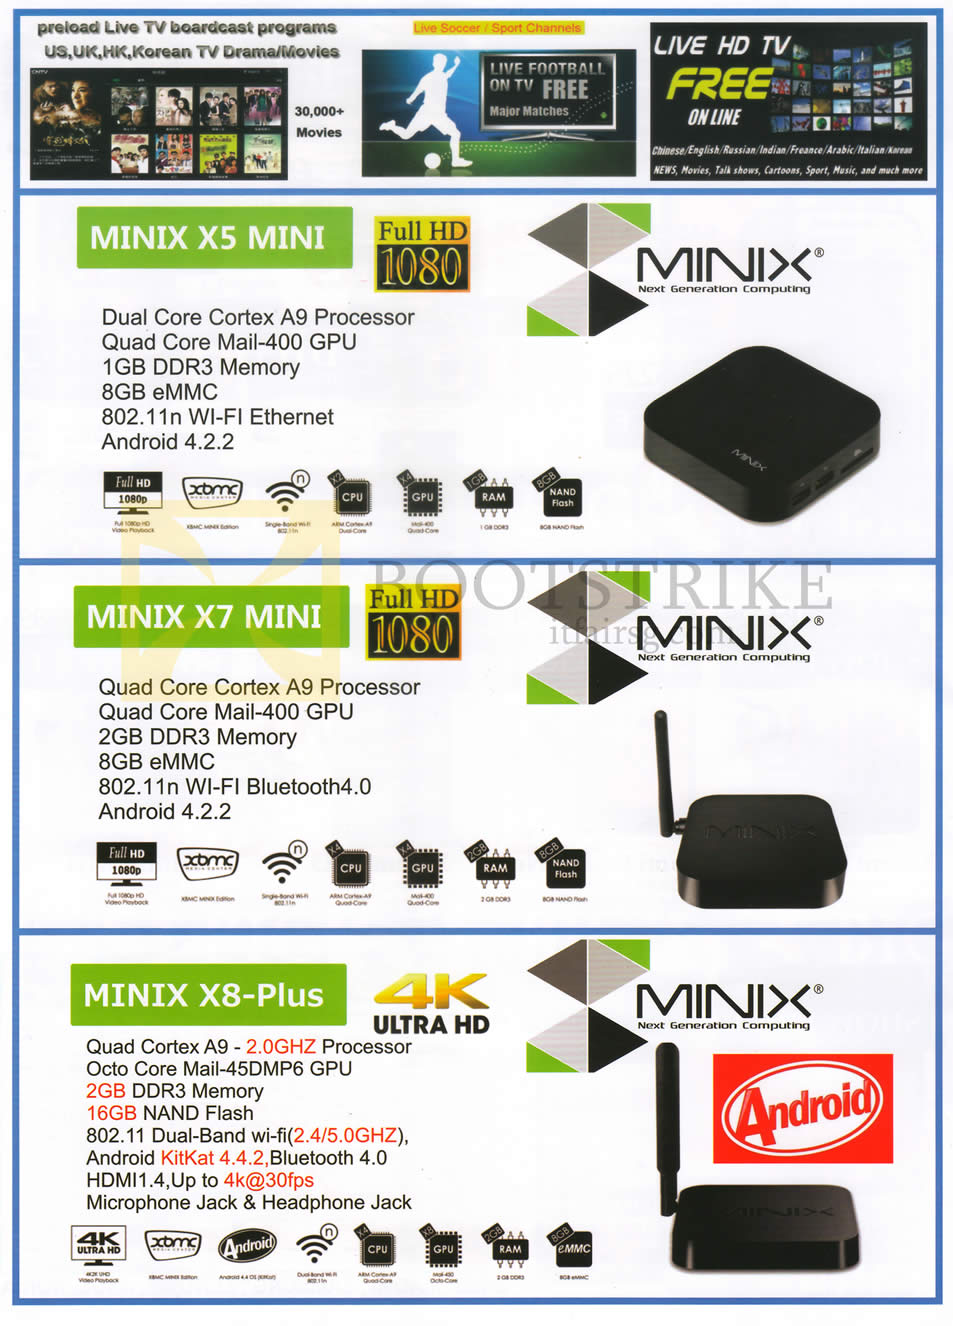 PC SHOW 2015 price list image brochure of SGVideopro Minix X5 Mini, X7 Mini, X8-Plus